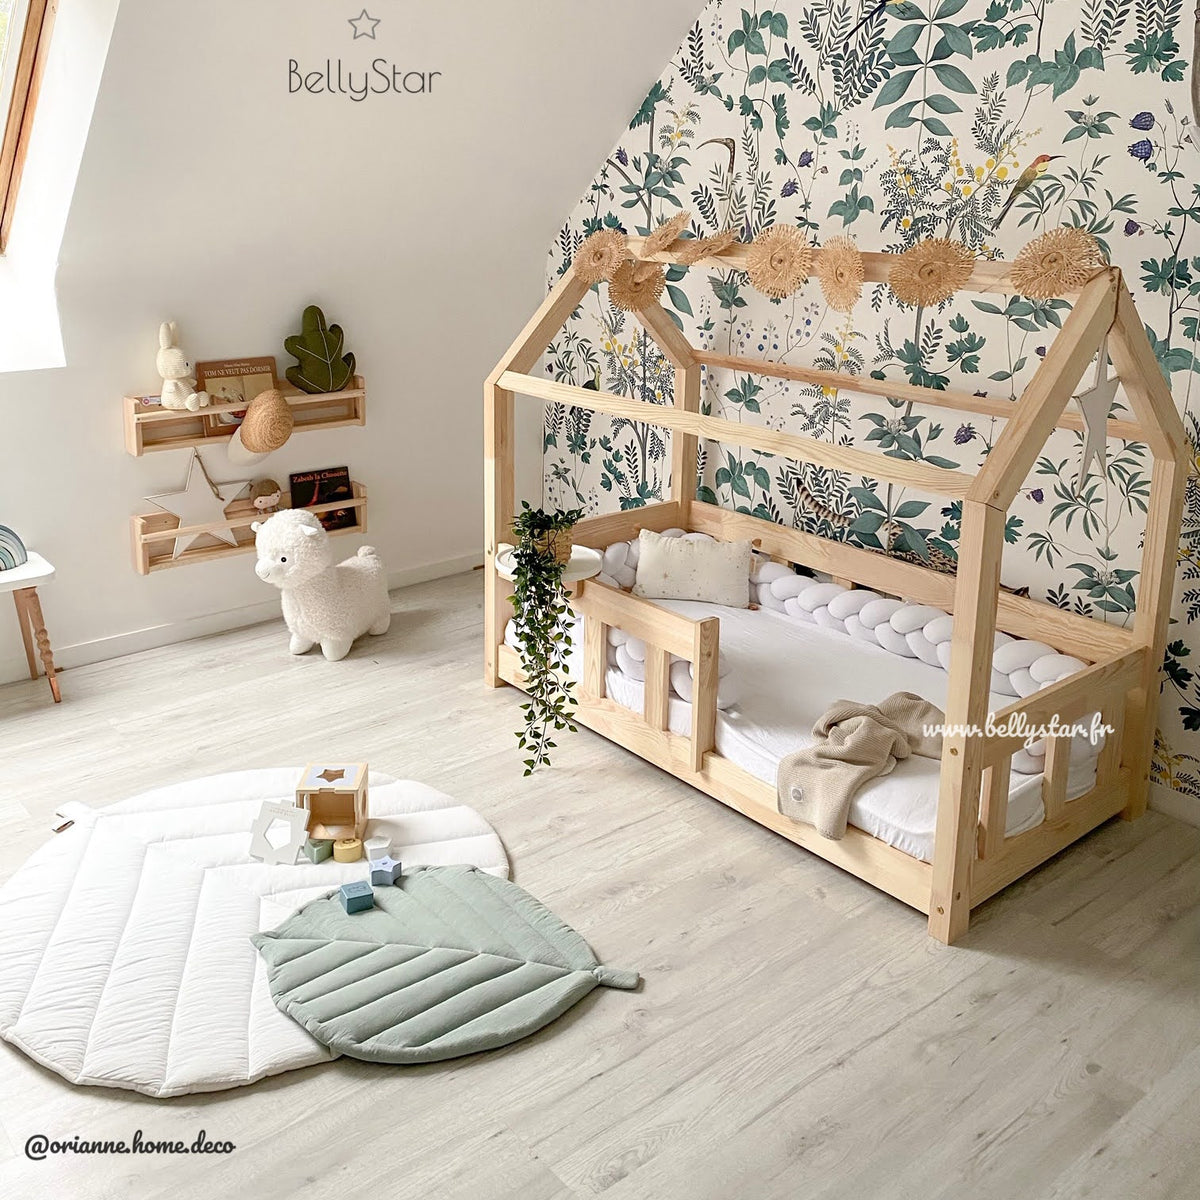 Lit tipi Montessori : trouver et acheter un lit Montessori